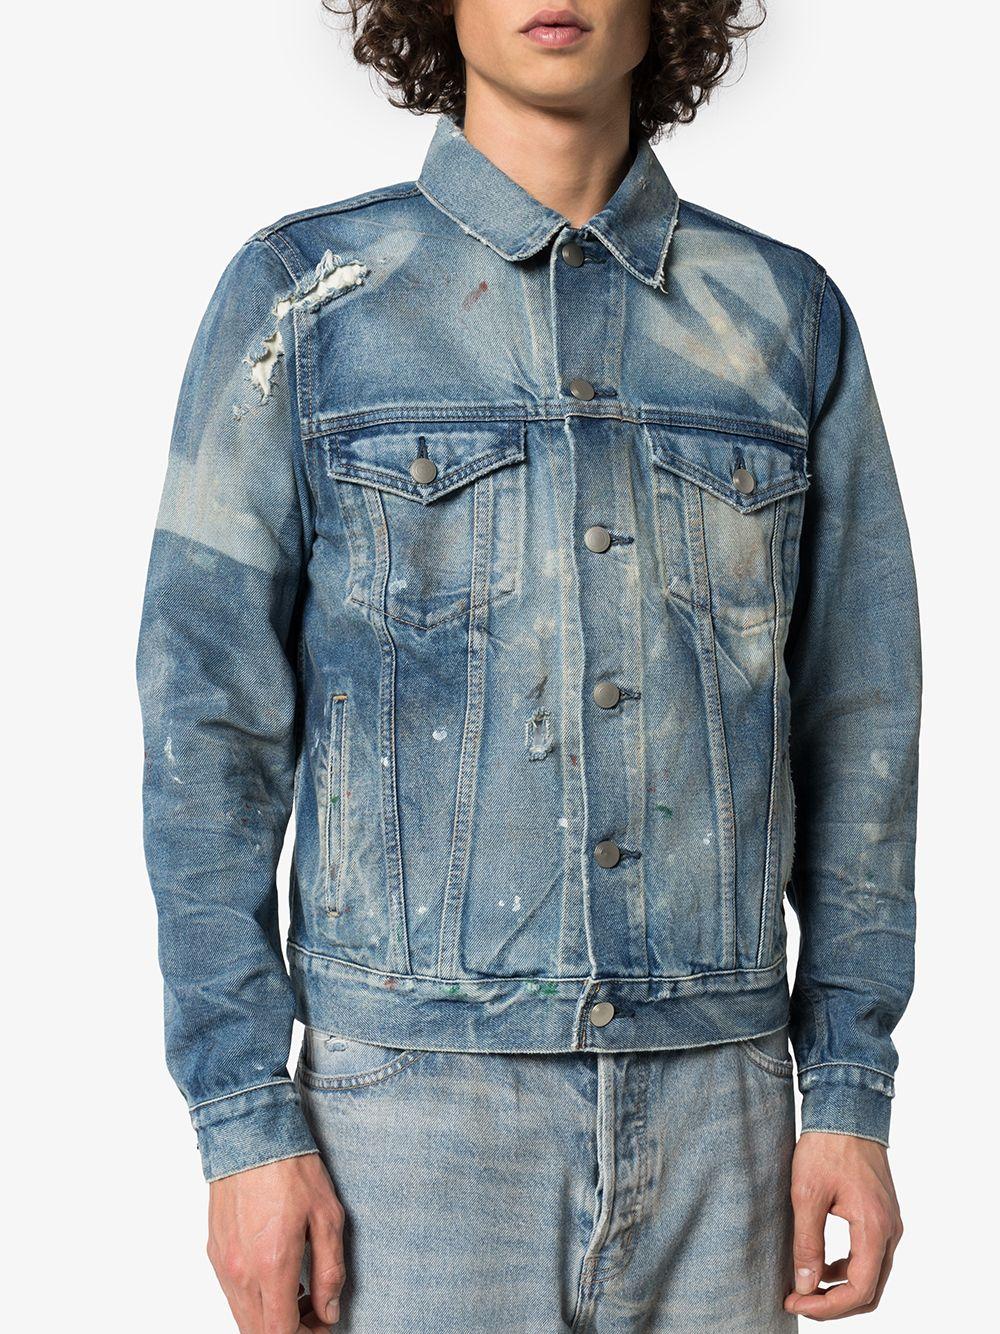 John Elliott Thumper Distressed Denim Jacket in Blue for Men - Save 4% ...